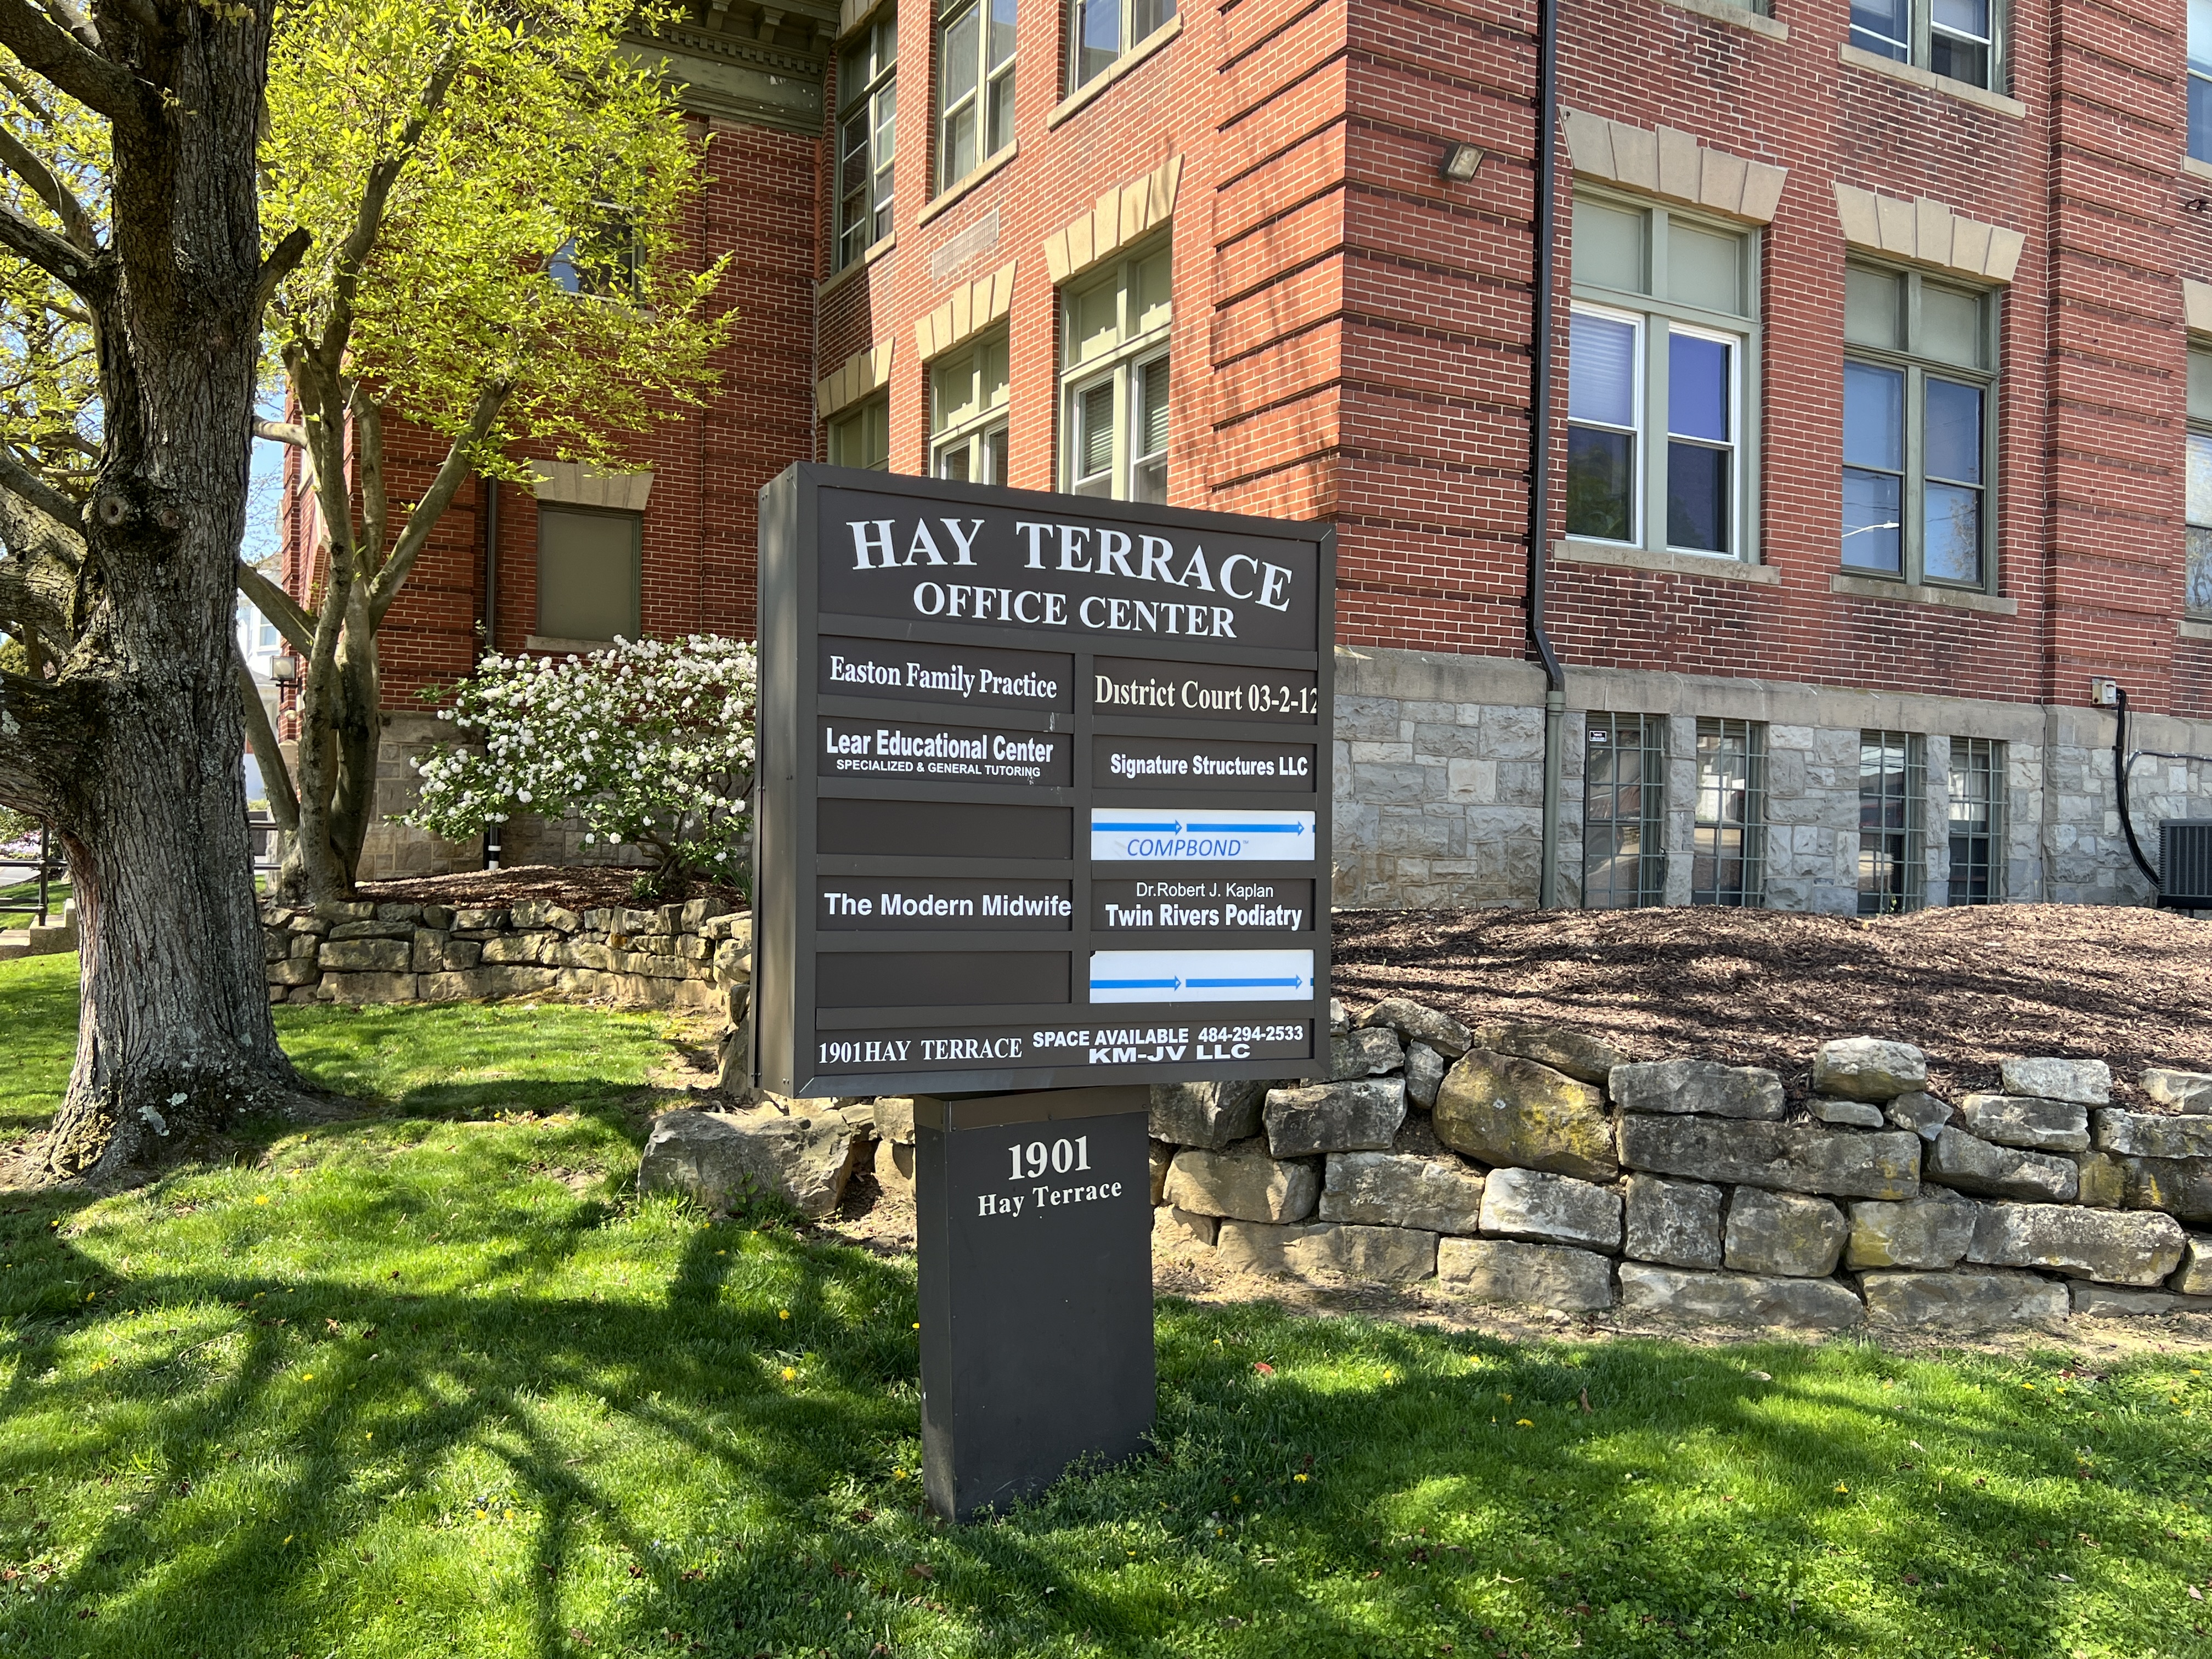 1901 Hay Terrace, Easton, Pennsylvania 18042, ,Office,For Lease,1901 Hay Terrace,1093